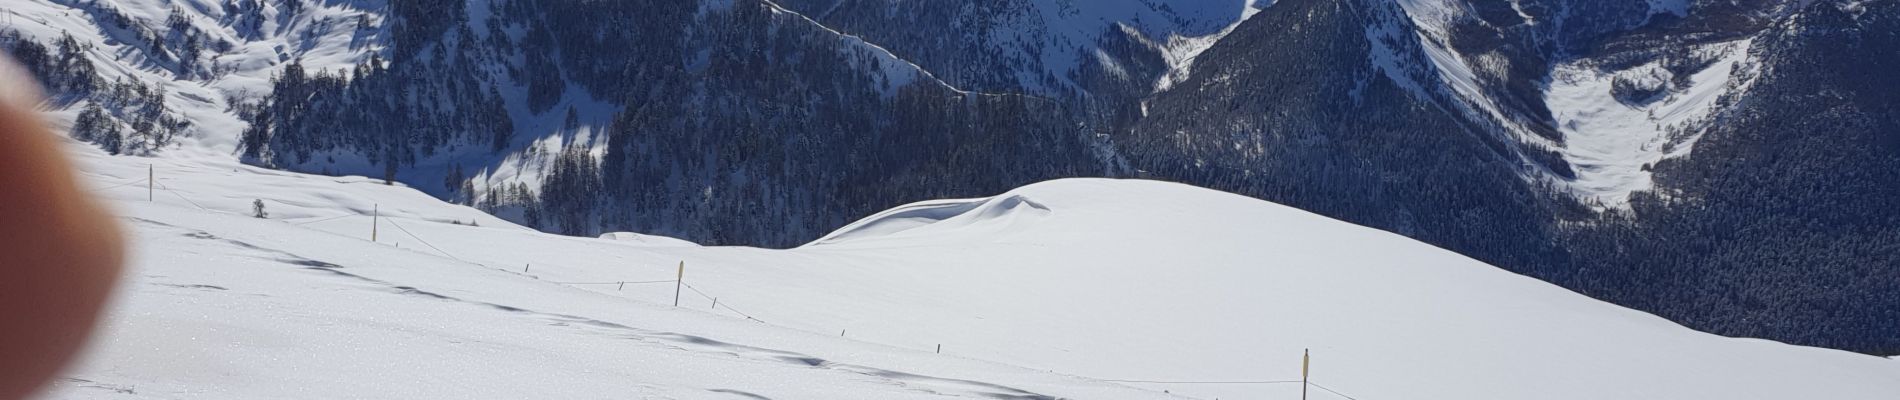 Tour Schneeschuhwandern Risoul - risoul l'homme de pierre - Photo